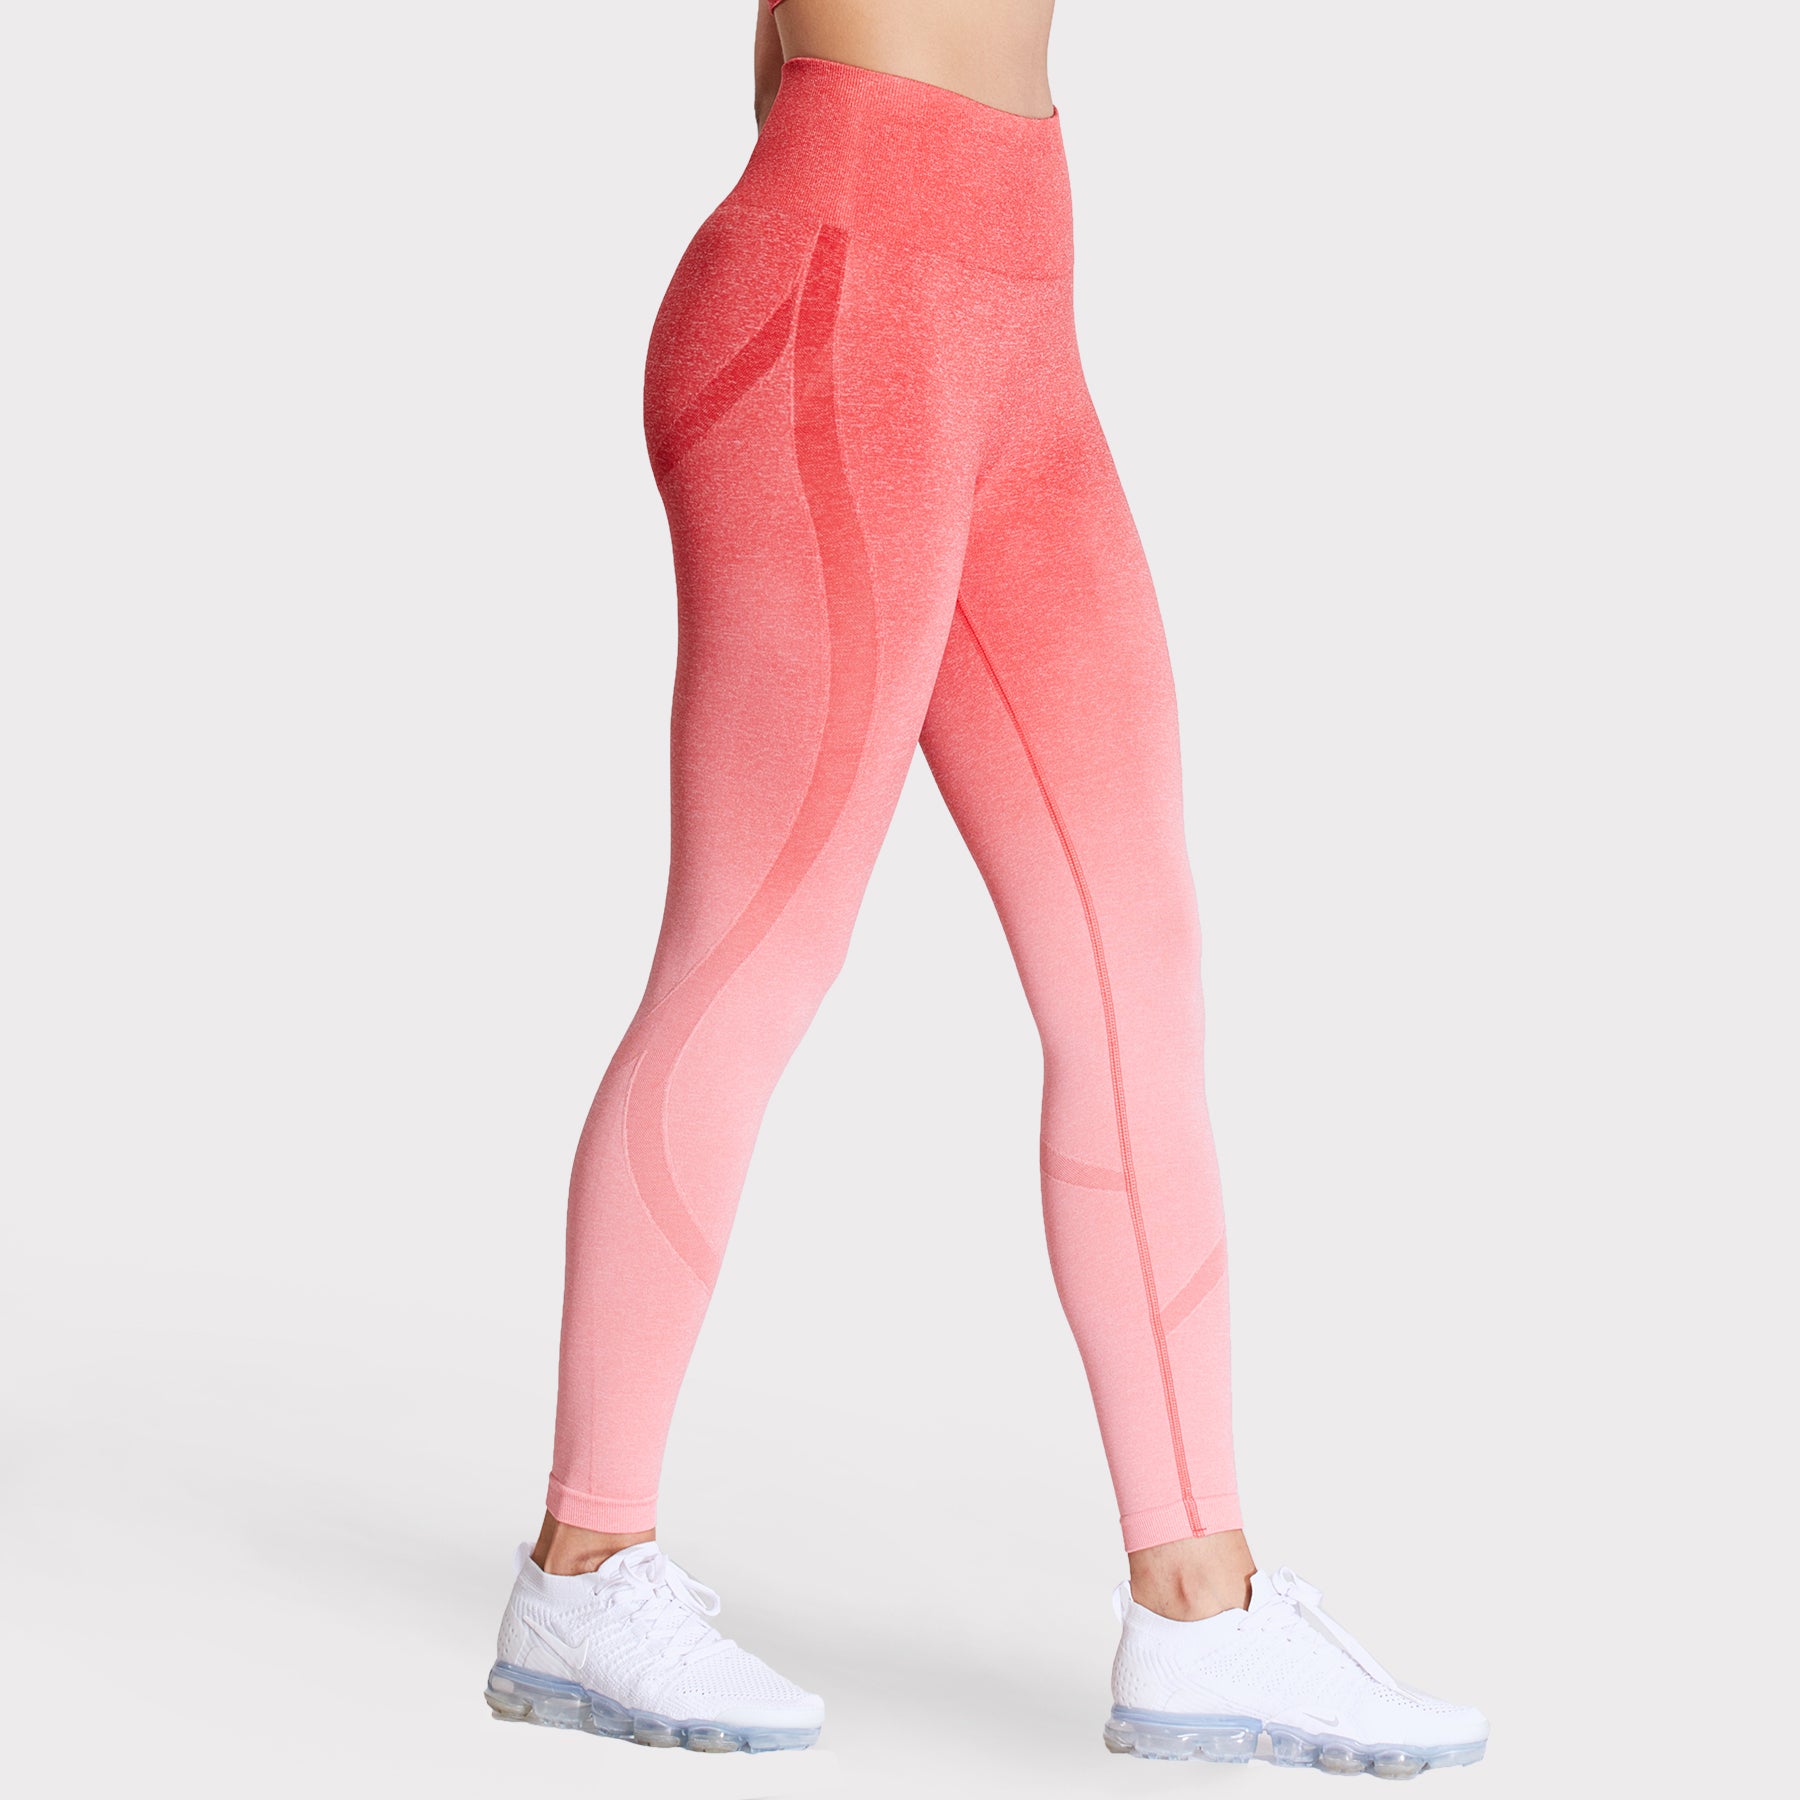 Aoxjox Seamless Legging for Women Carbon Tummy Control Workout Gym